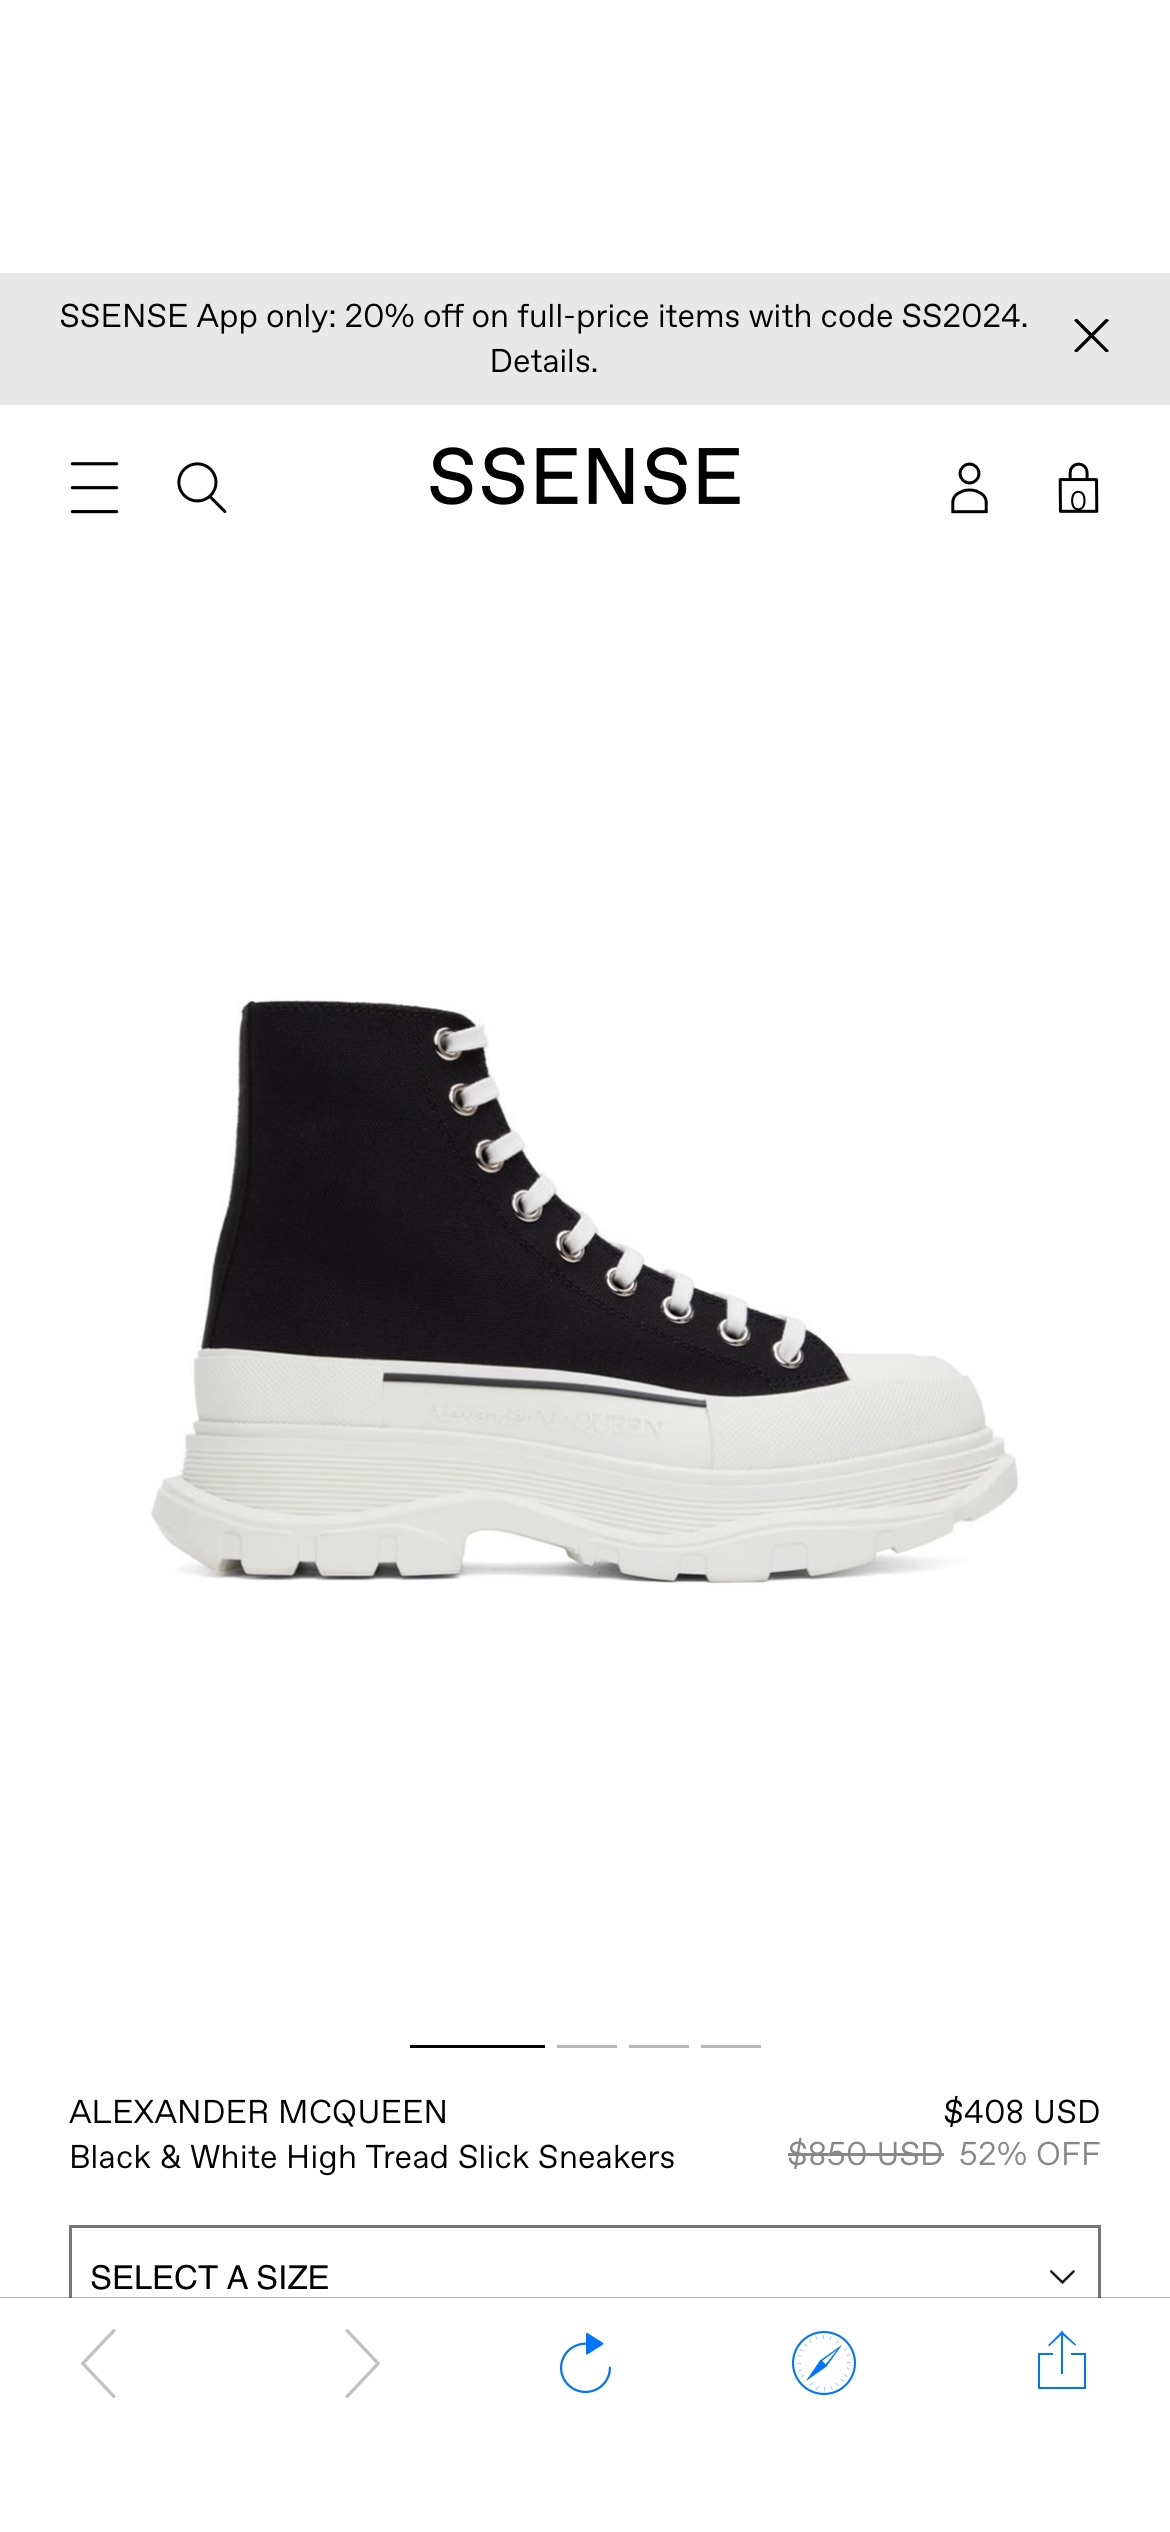 Black & White High Tread Slick Sneakers by Alexander McQueen on Sale